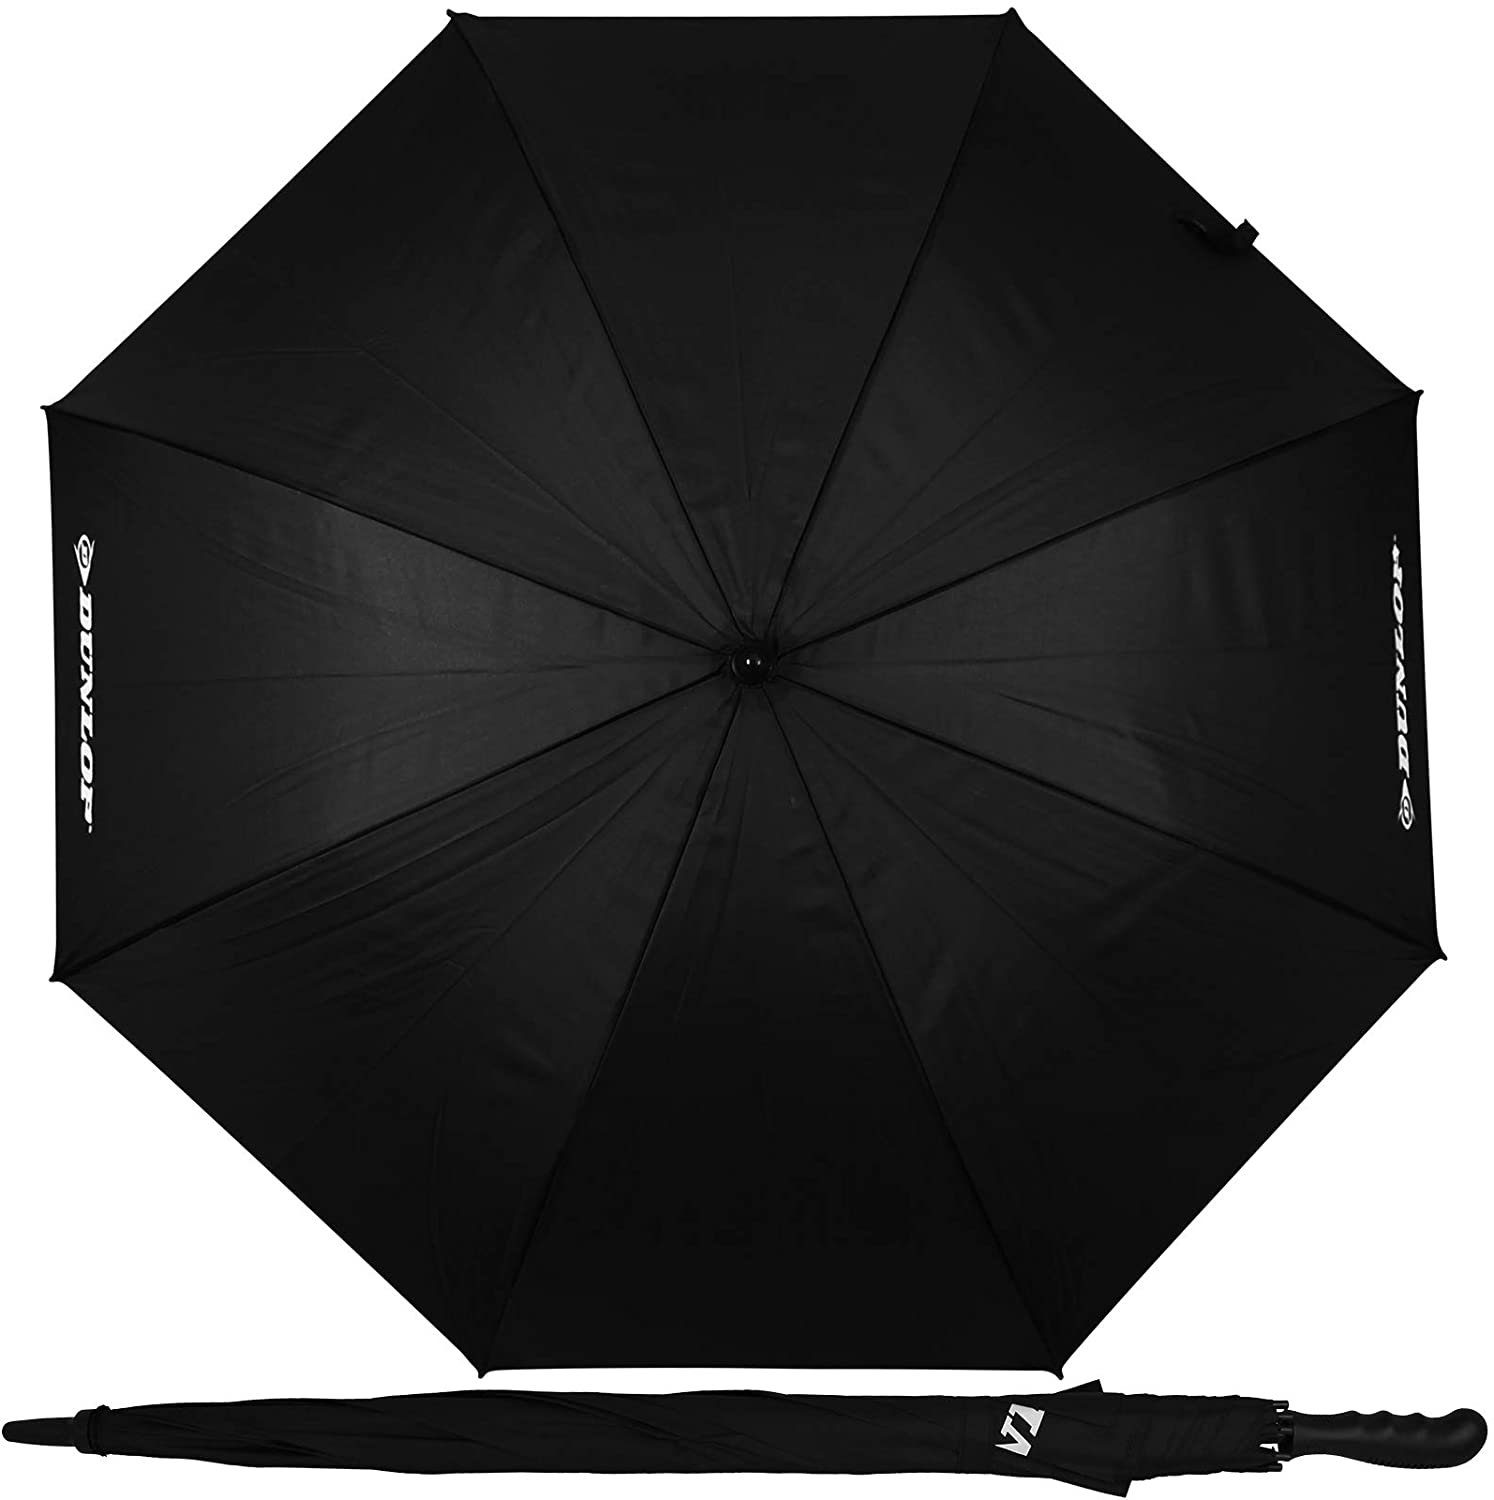 Dokado Partnerschirm XXL Paar Regenschirm Partnerschirm Personen mit Stockschirm 2 für Doppelregenschirm Dunlop Familienschirm grau 130cm Farbwahl